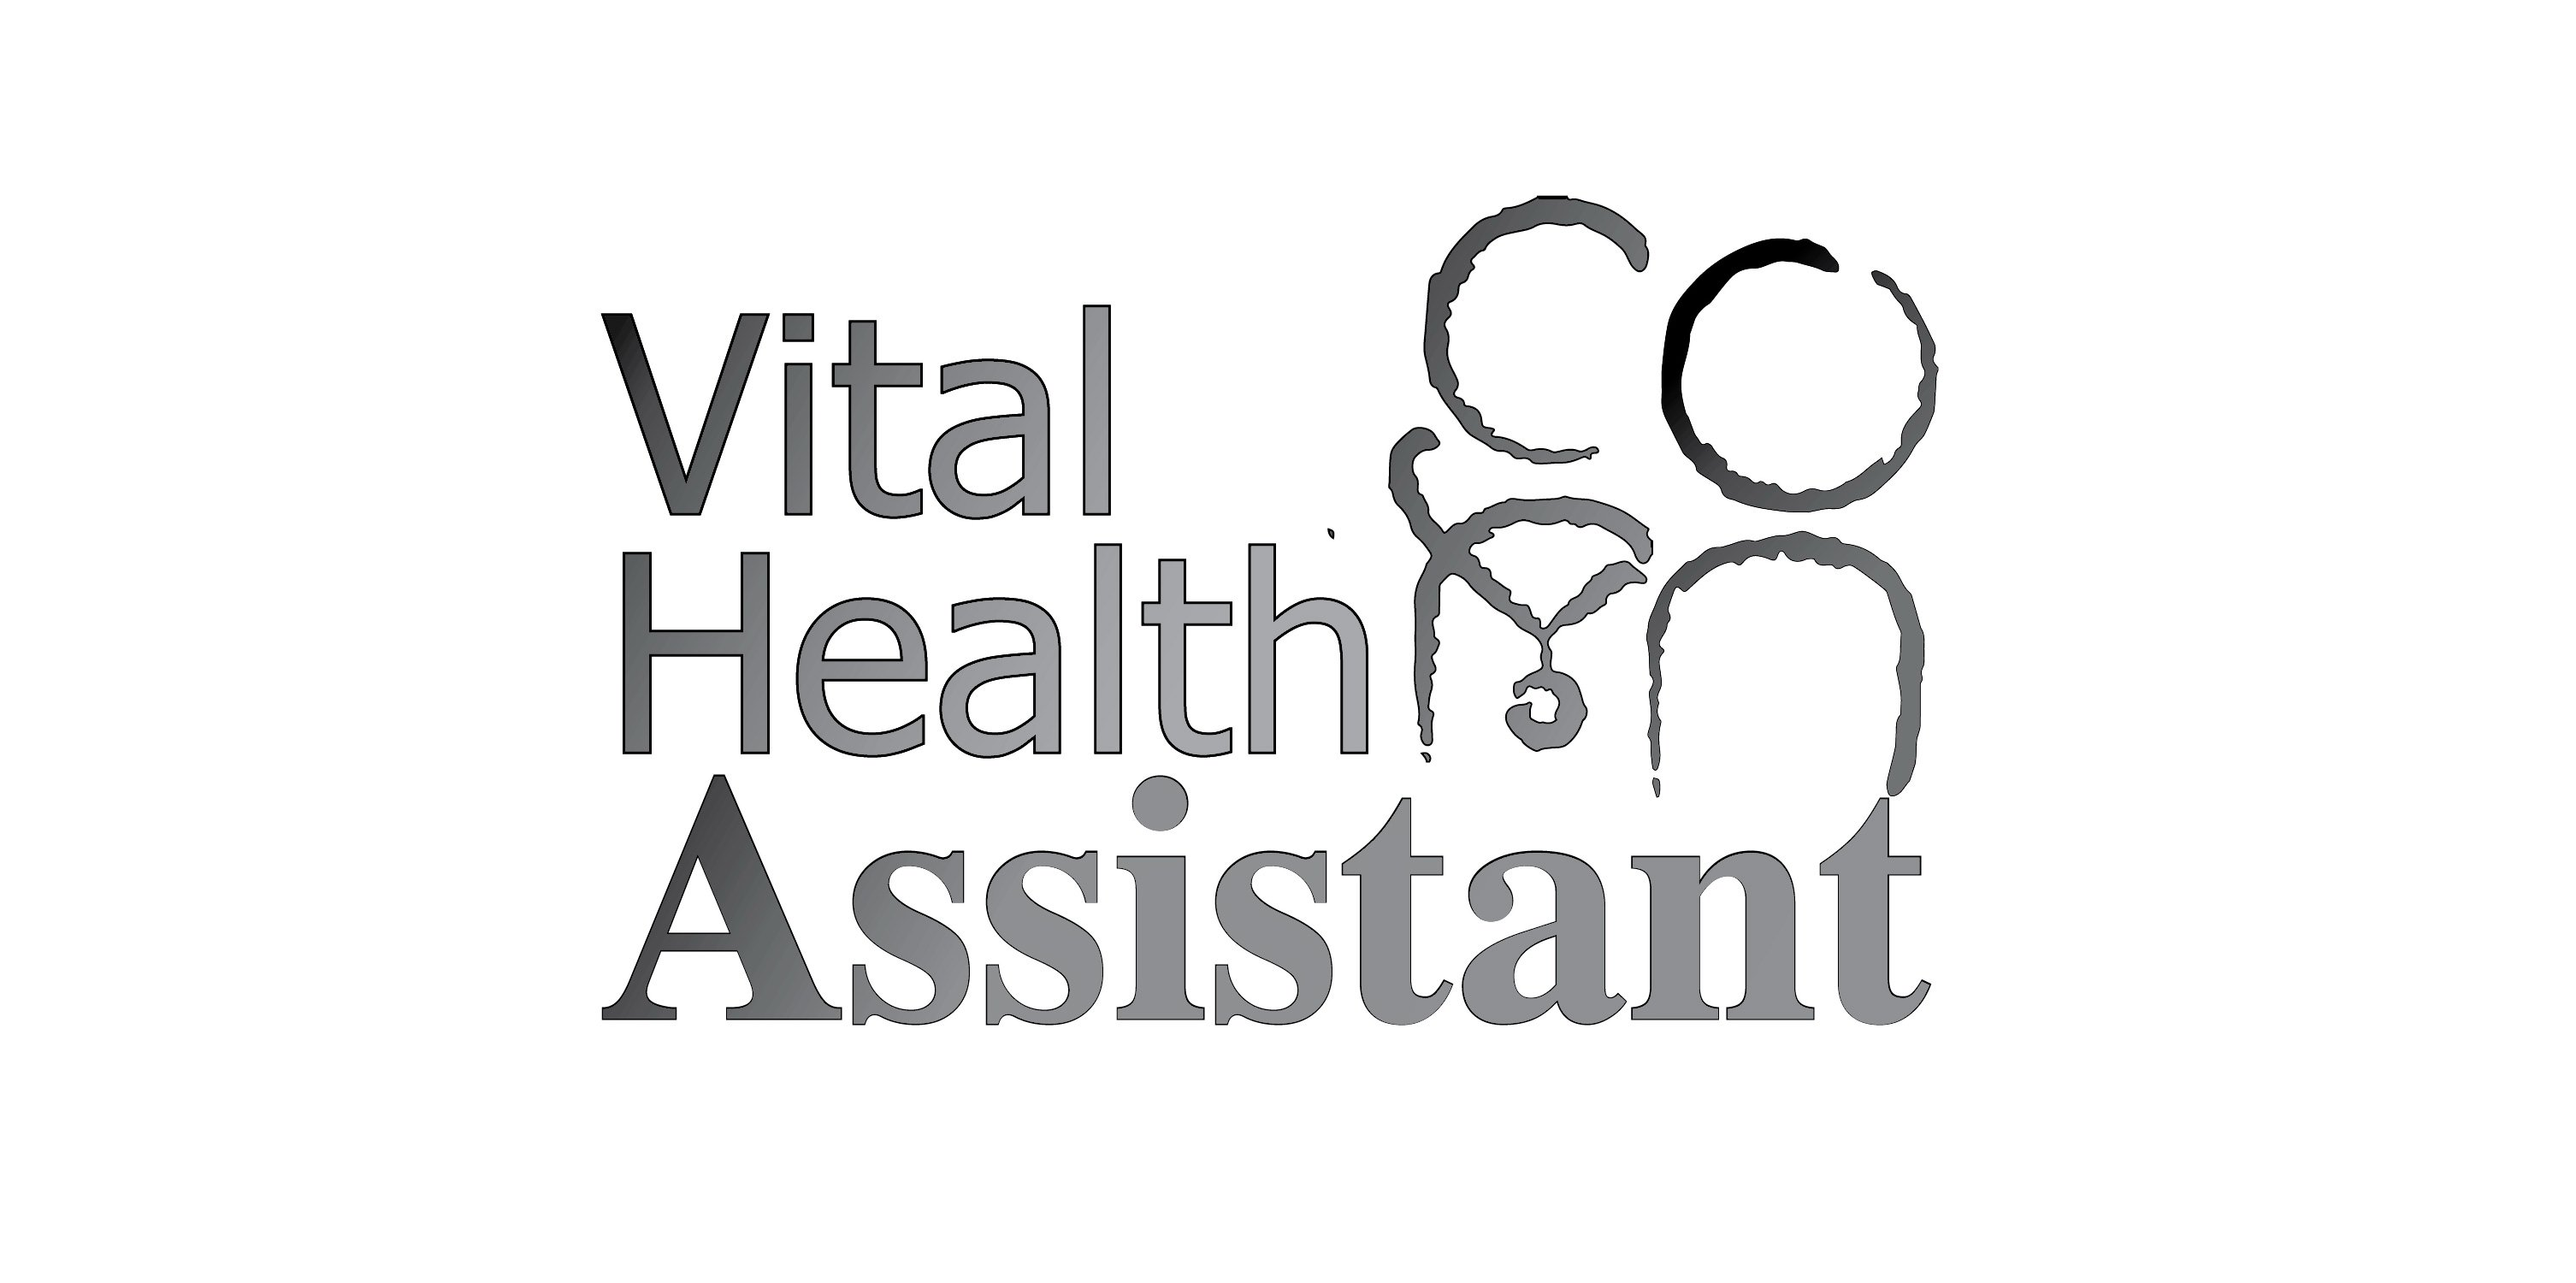  VITAL HEALTH ASSISTANT